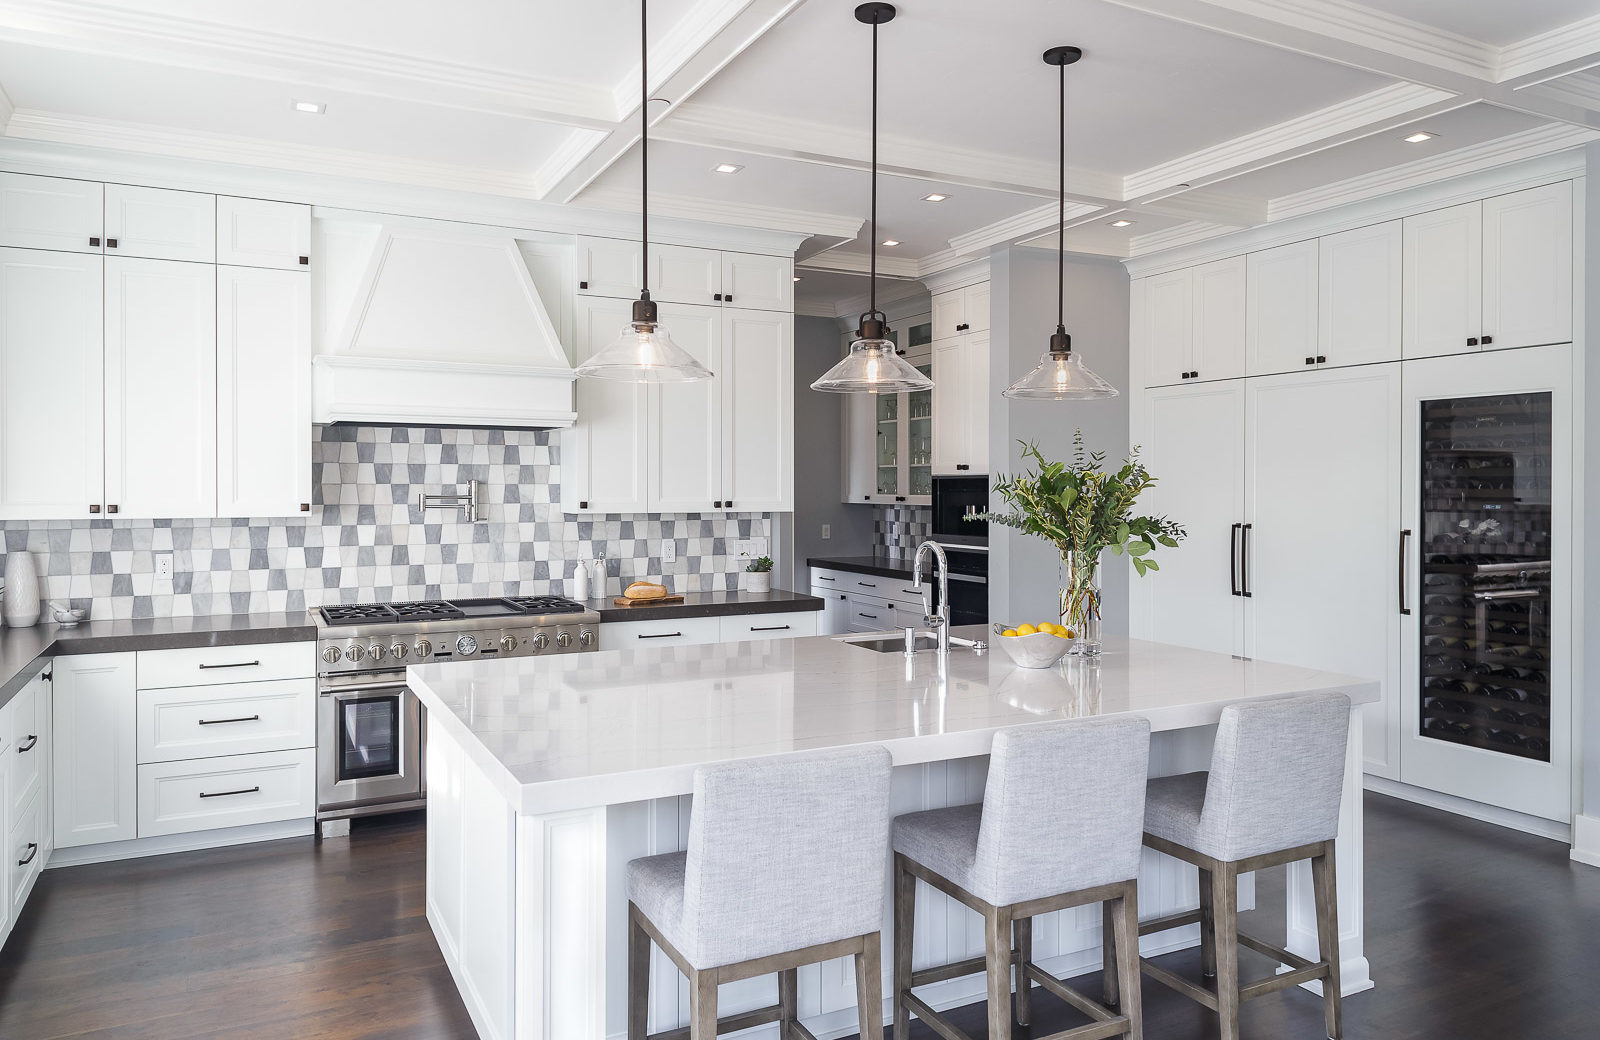 Award-winning large open plan kitchen with large island, quartz countertops, white painted cabinets, tile backsplash